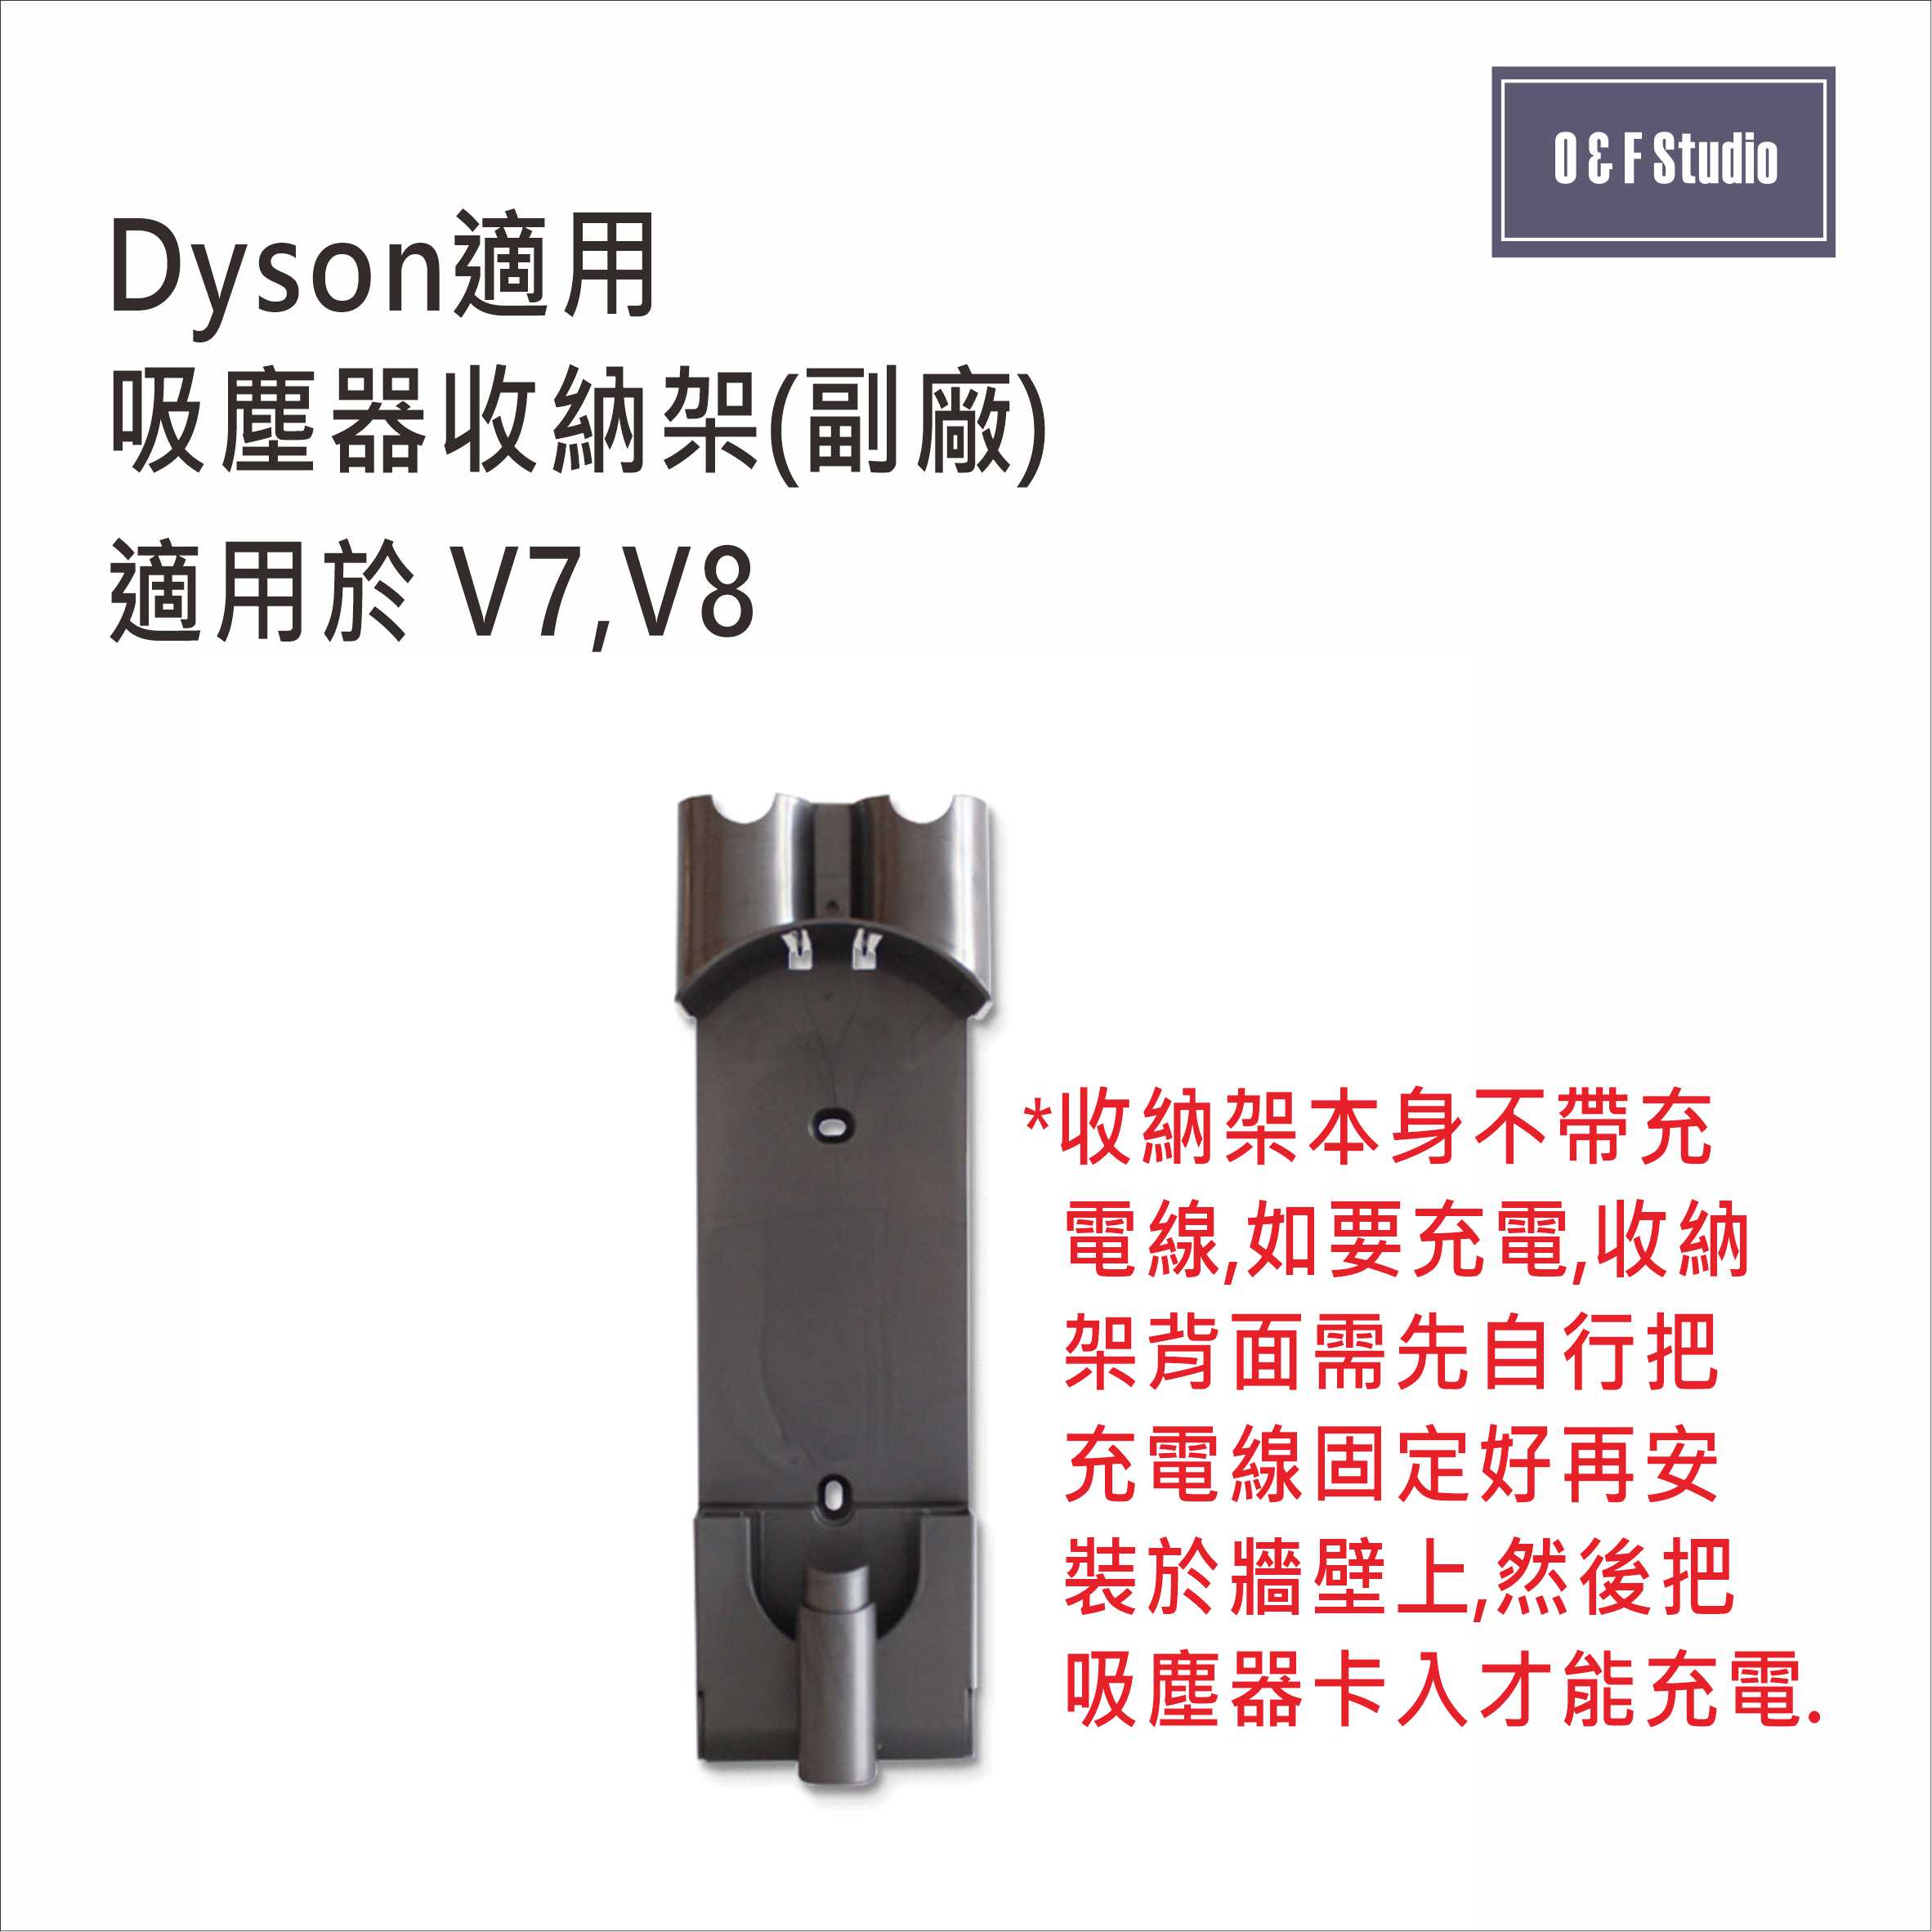 DYSON戴森適用吸塵器收納架 適用V7 V8 (副廠)台灣現貨 壁掛架 充電架 配件收納架【居家達人DS027】